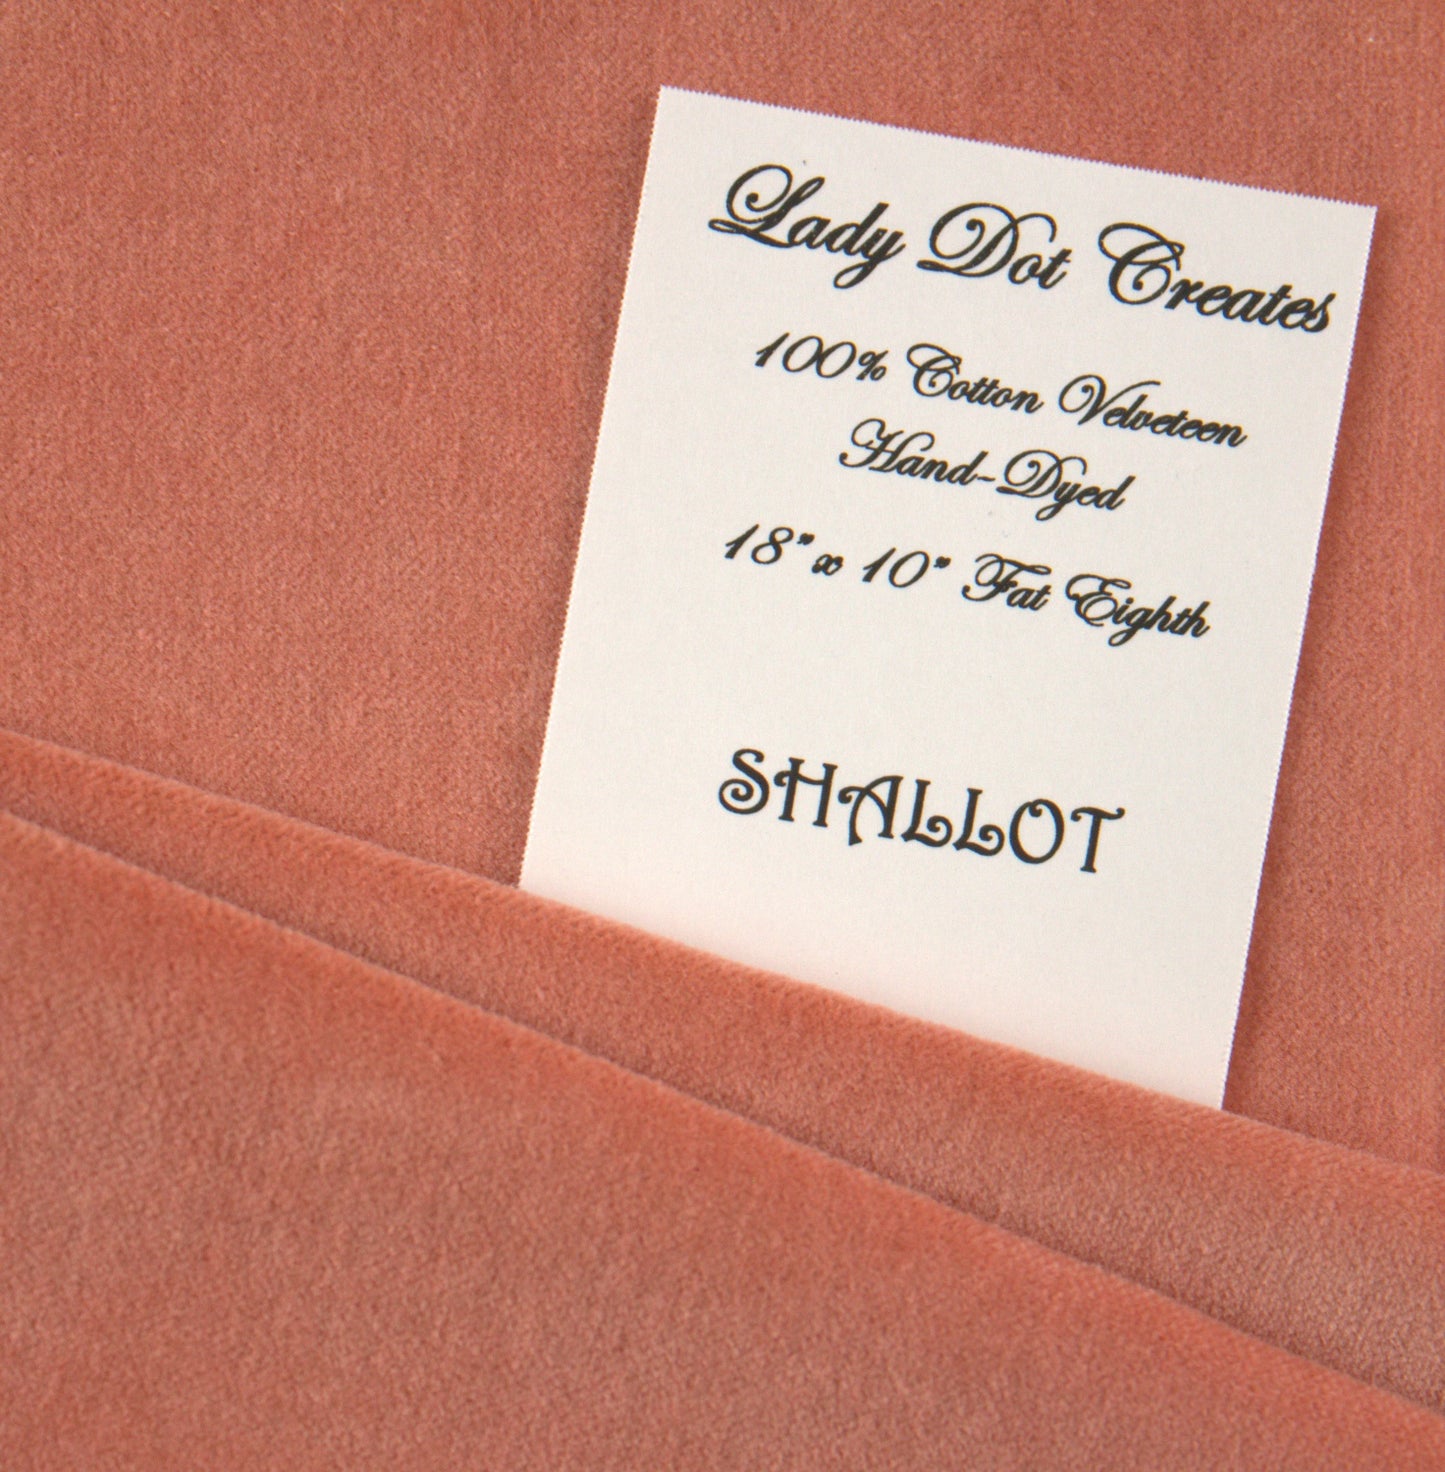 Lady Dot Creates - Shallot Cotton Velveteen Fat Eighth Fabric